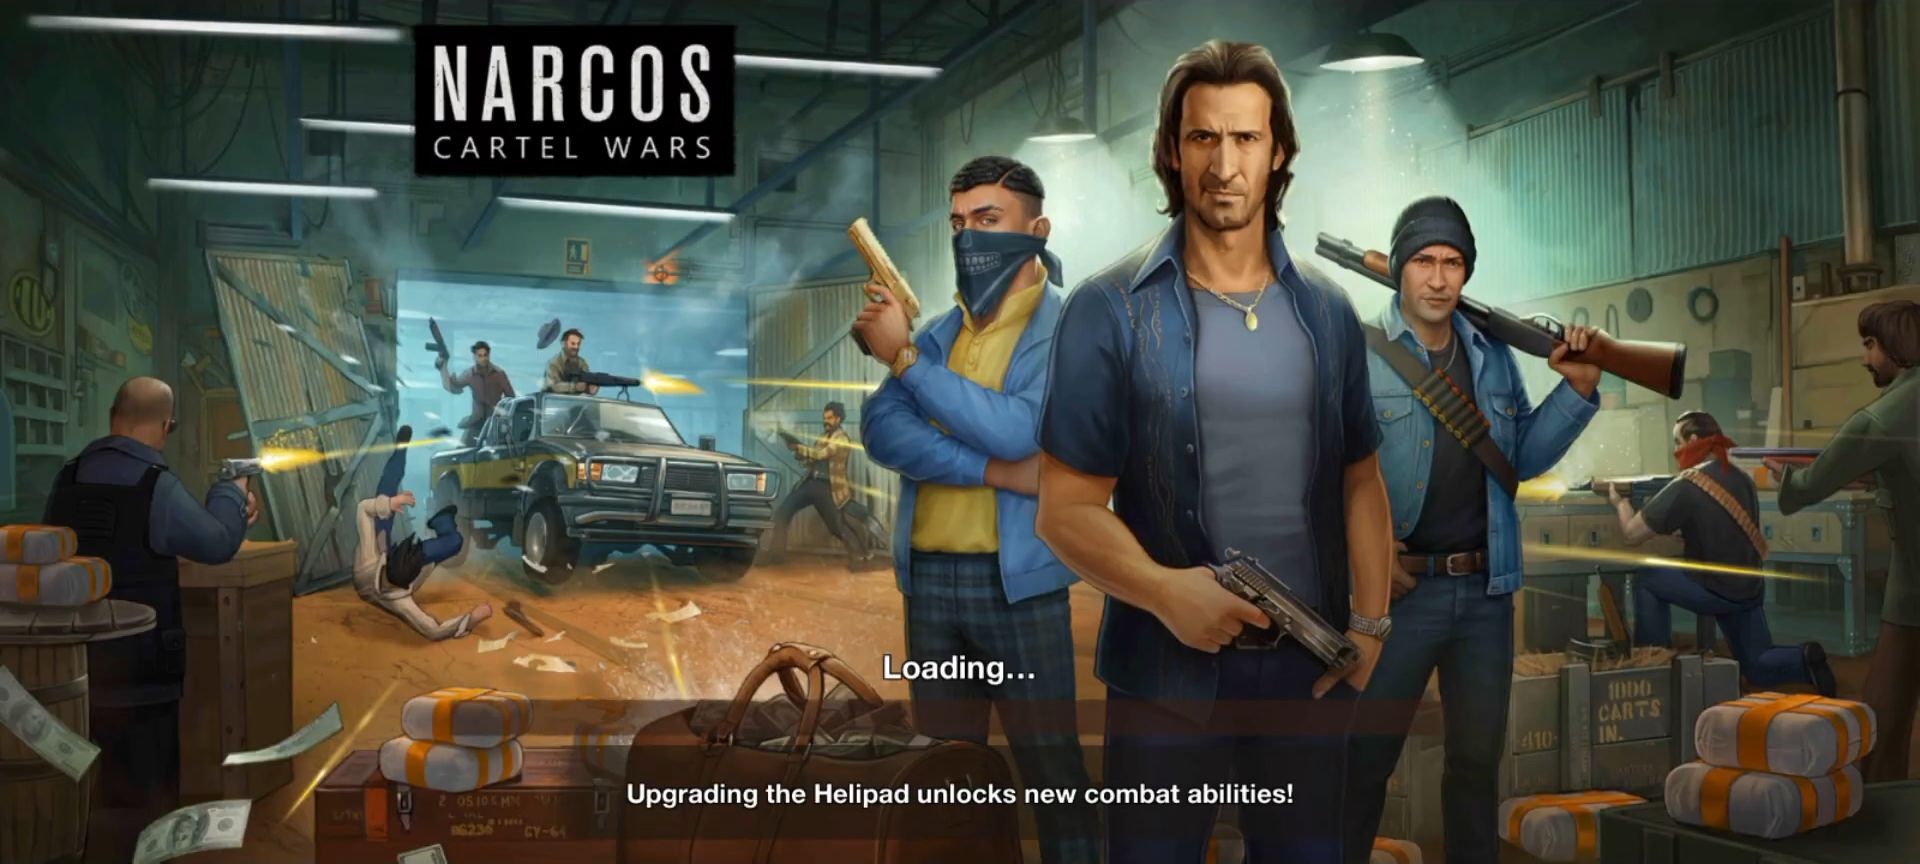 Скачать Narcos: Cartel Wars Unlimited: Android Криминал игра на телефон и планшет.